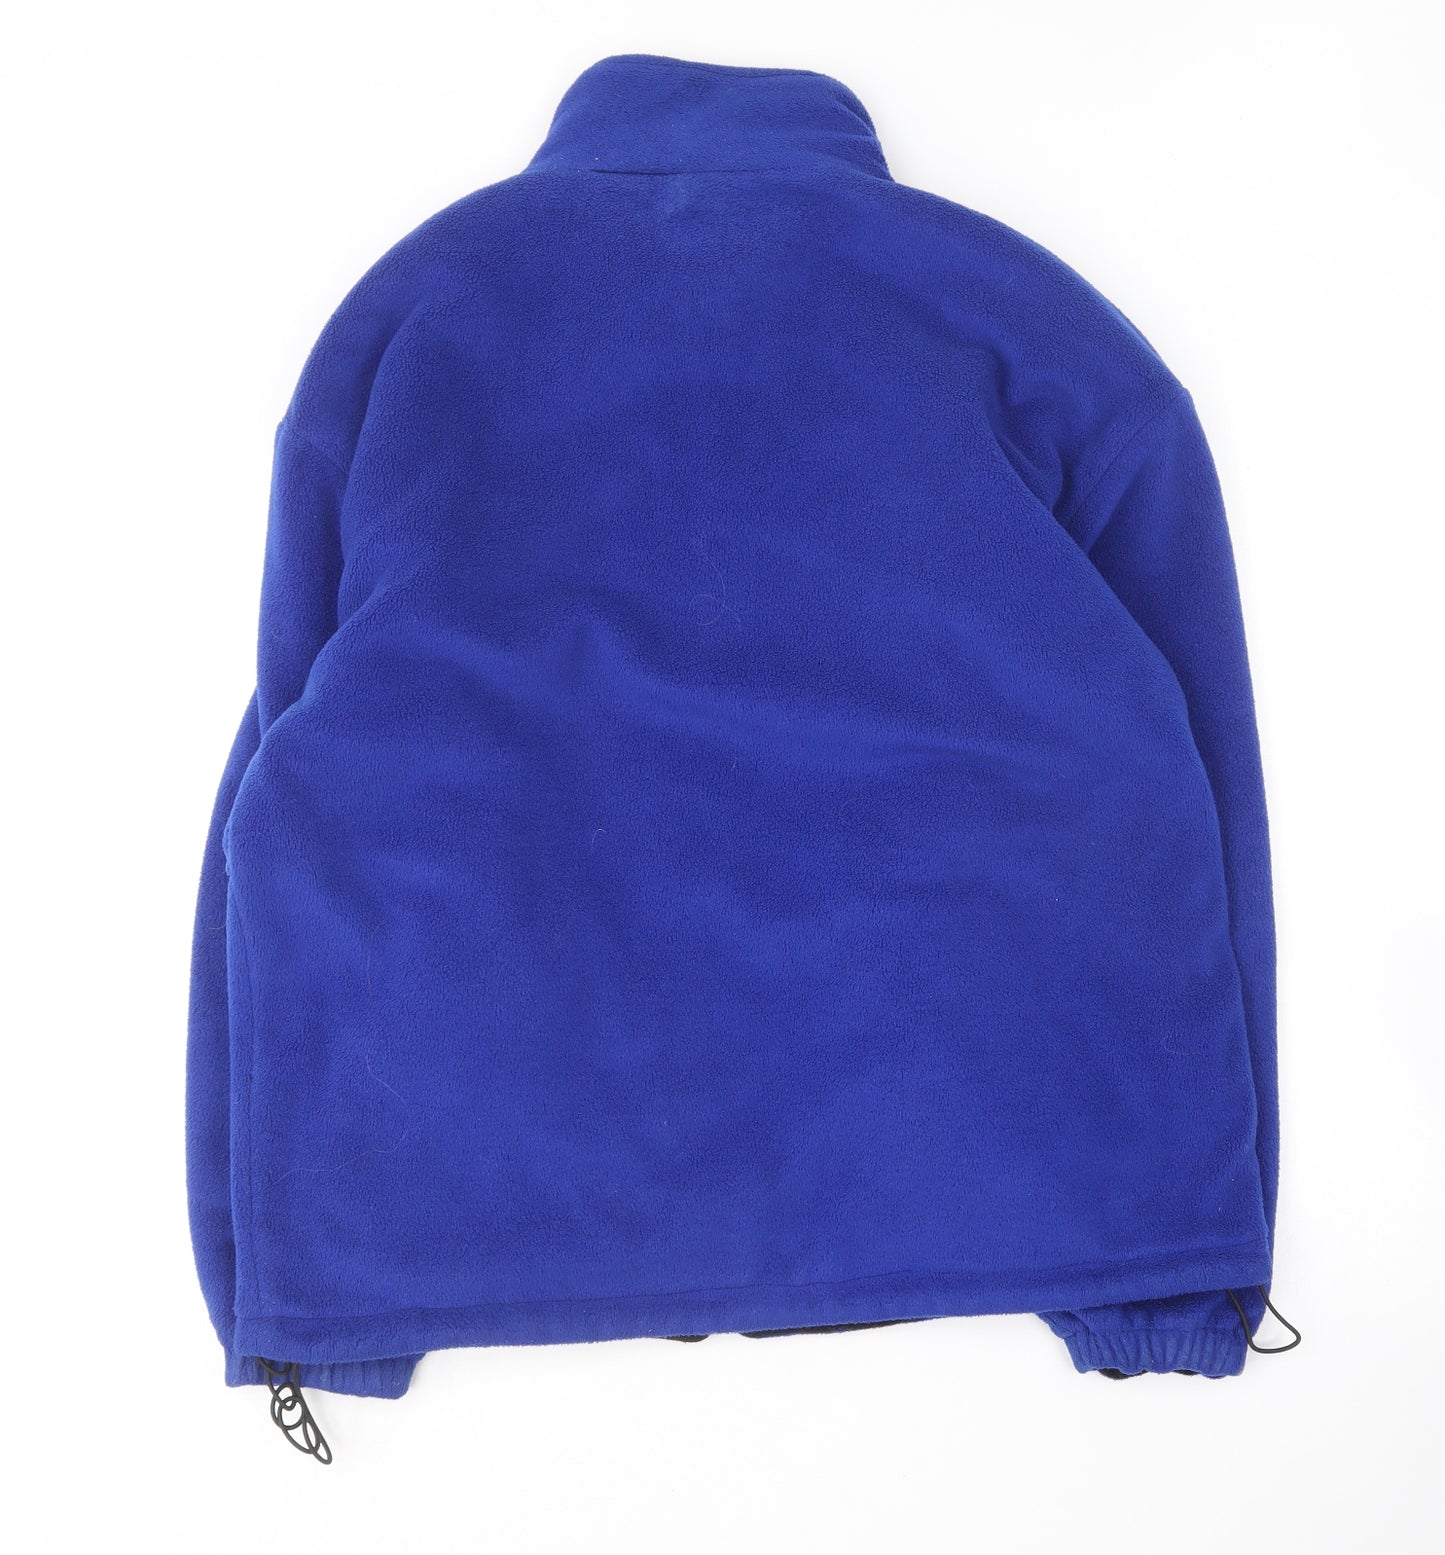 Icecube Mens Blue Polyester Full Zip Sweatshirt Size S